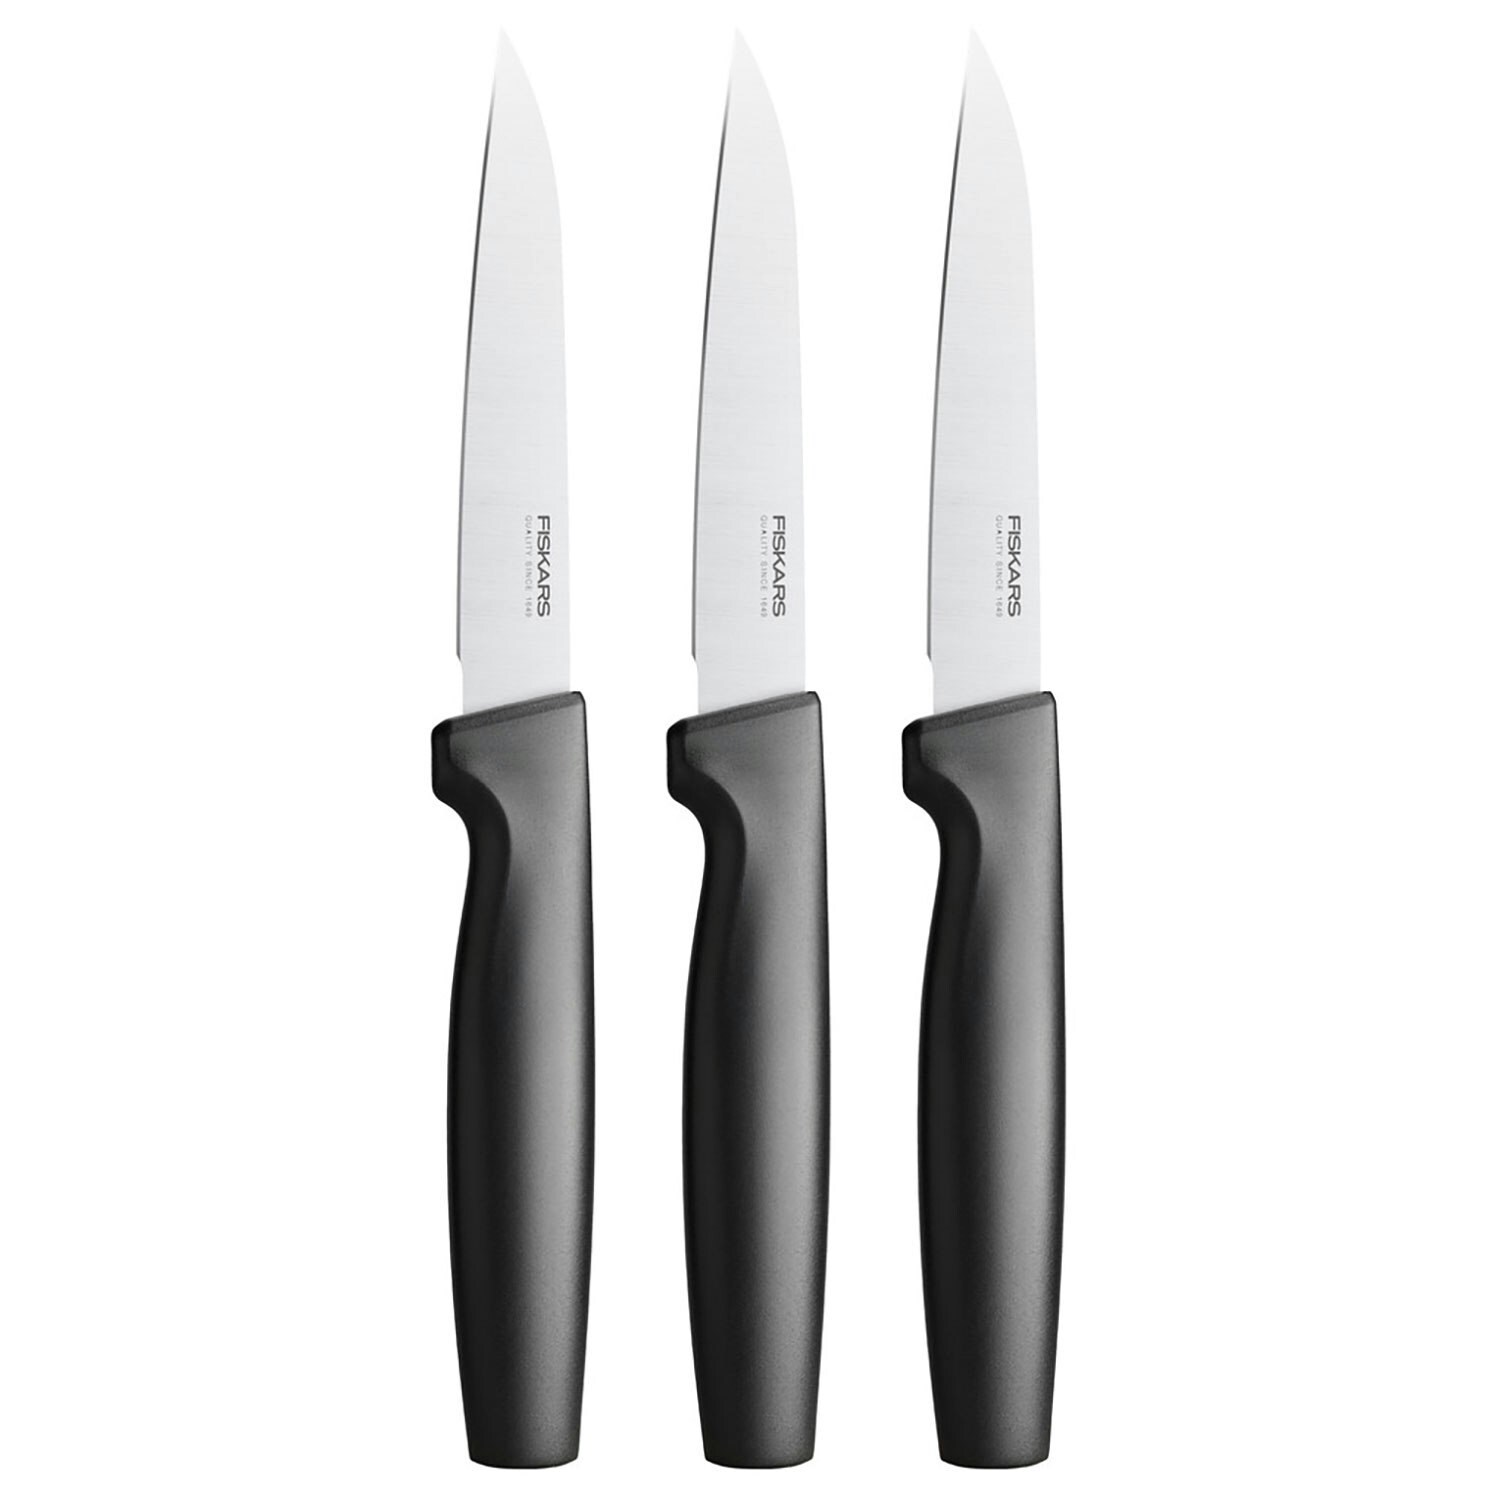 https://royaldesign.com/image/2/fiskars-functional-form-knife-set-universal-3-pack-0